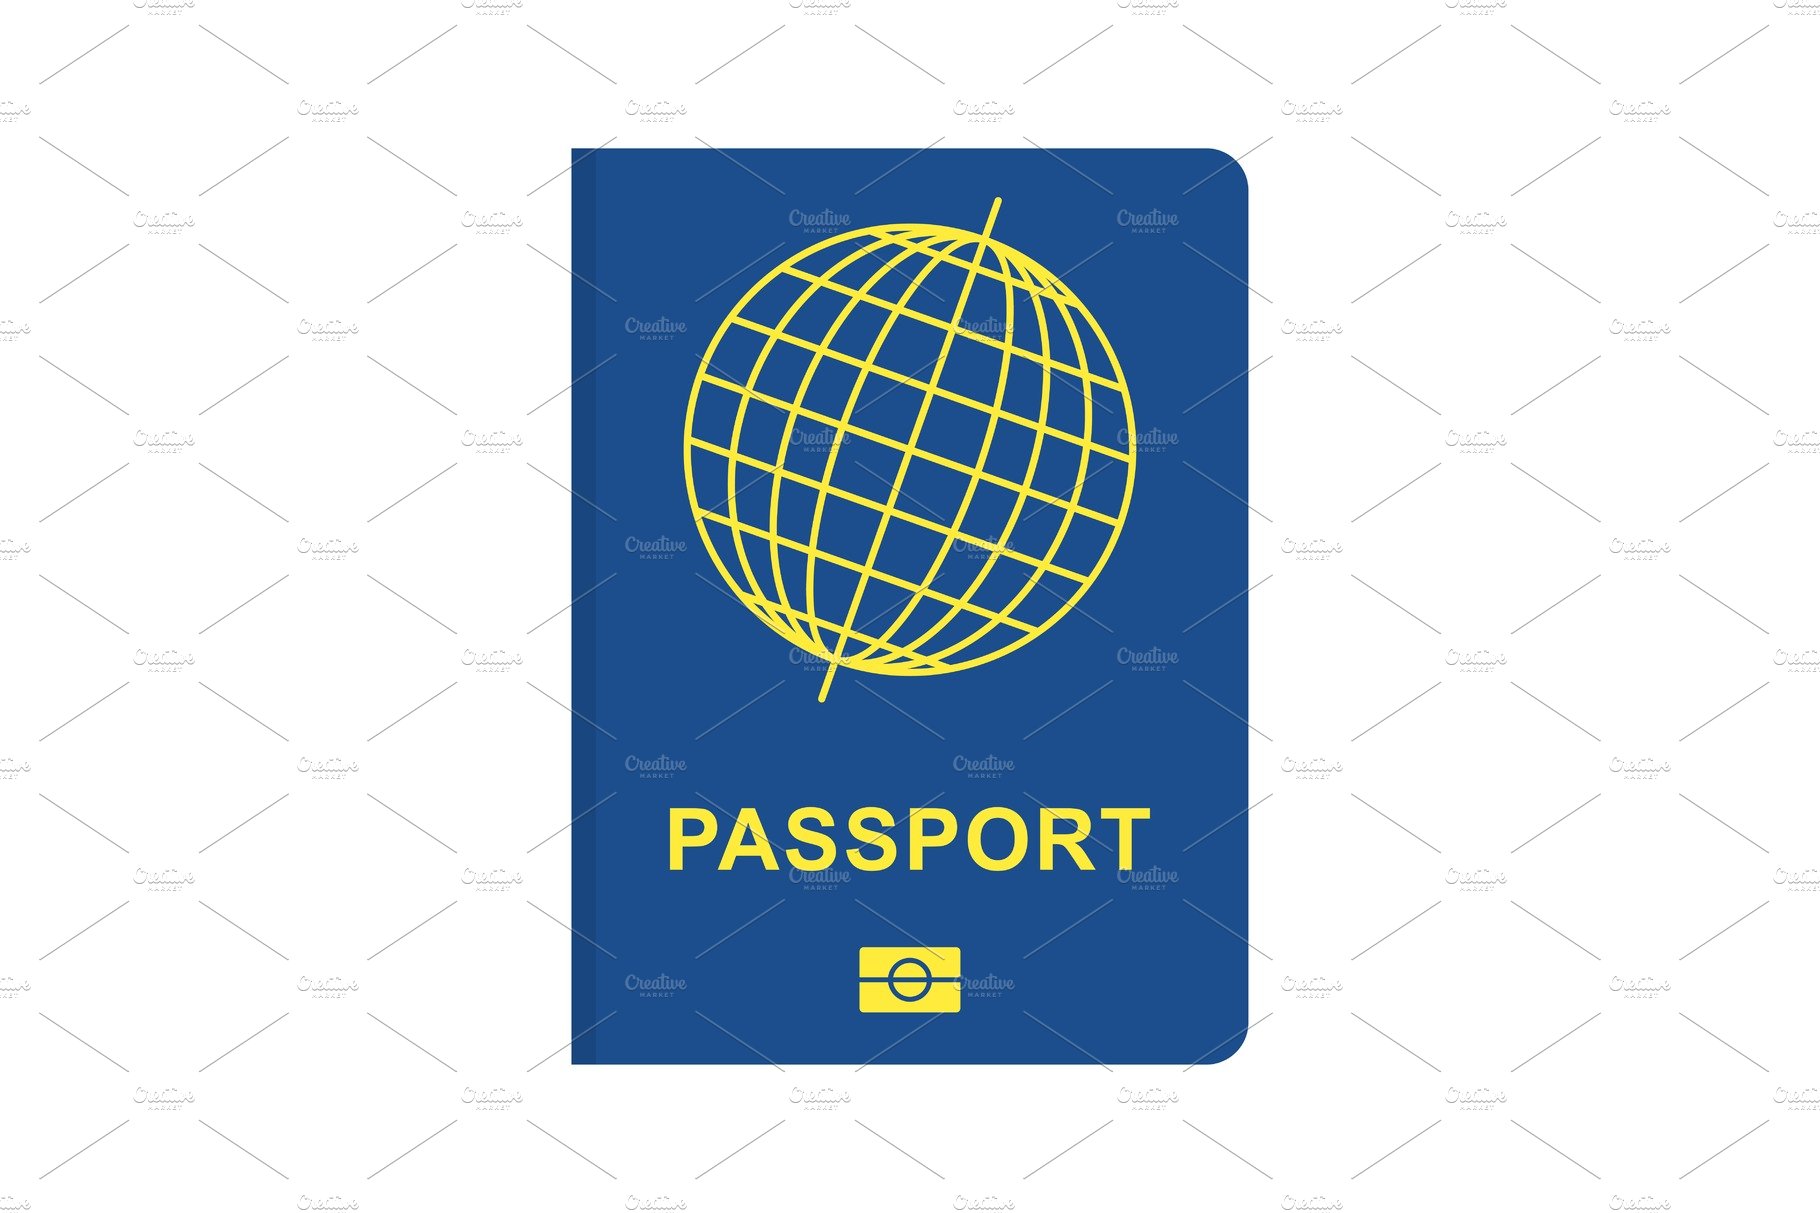 passport blue flat cover image.